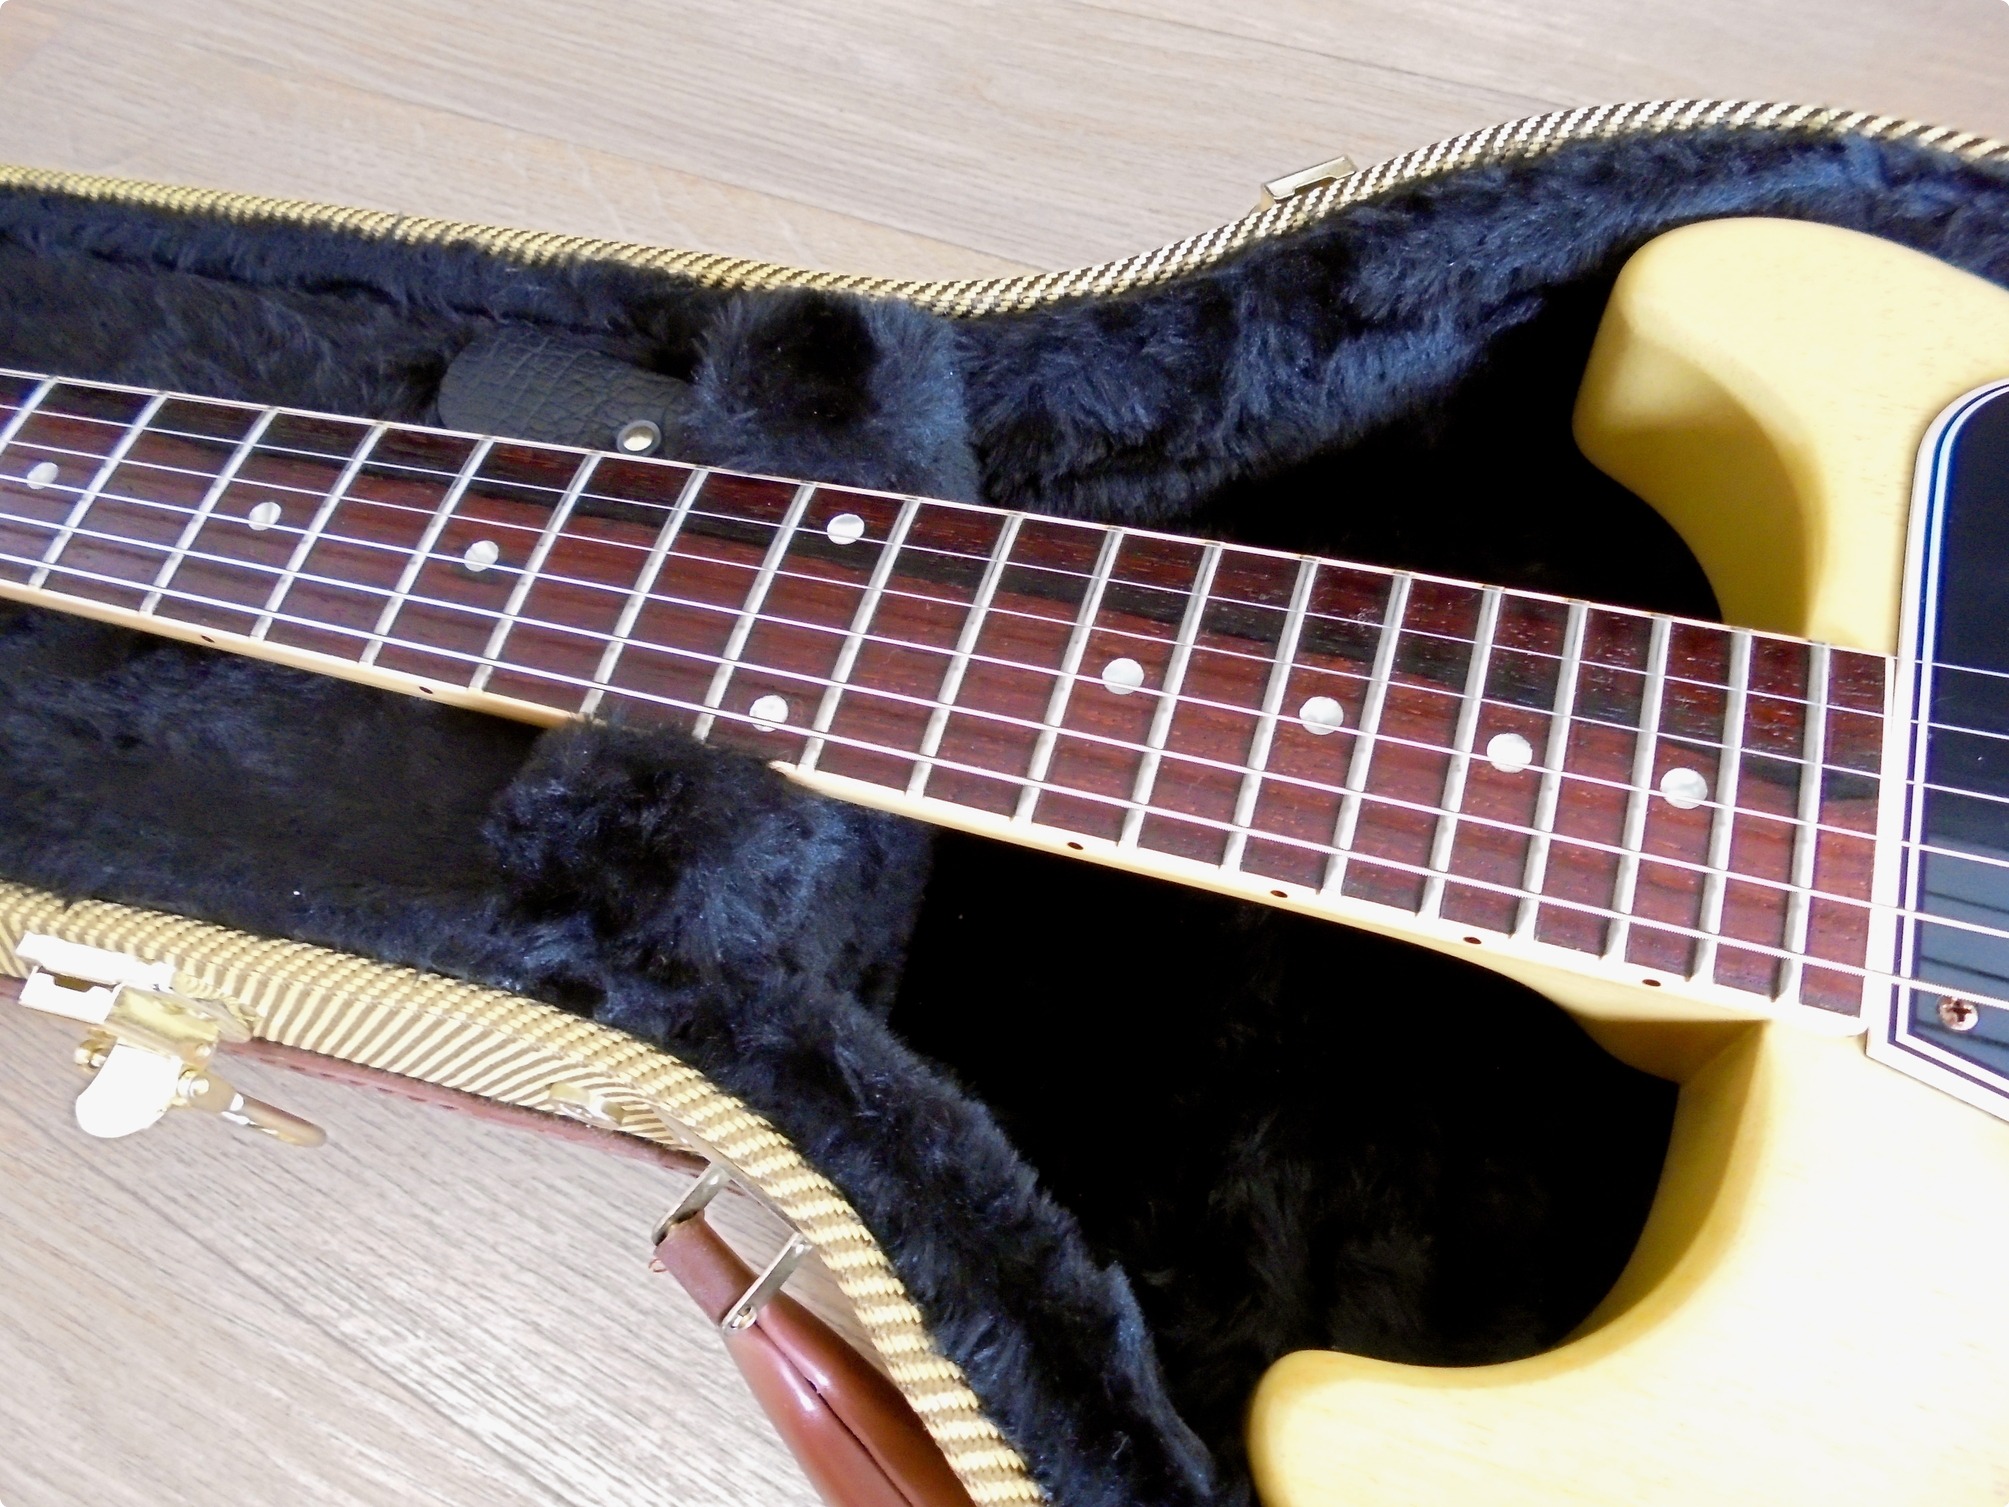 Gibson Les Paul Special 1960 Custom Shop 07 Tv Yellow Guitar For Sale Dear Wood Guitar Boutique